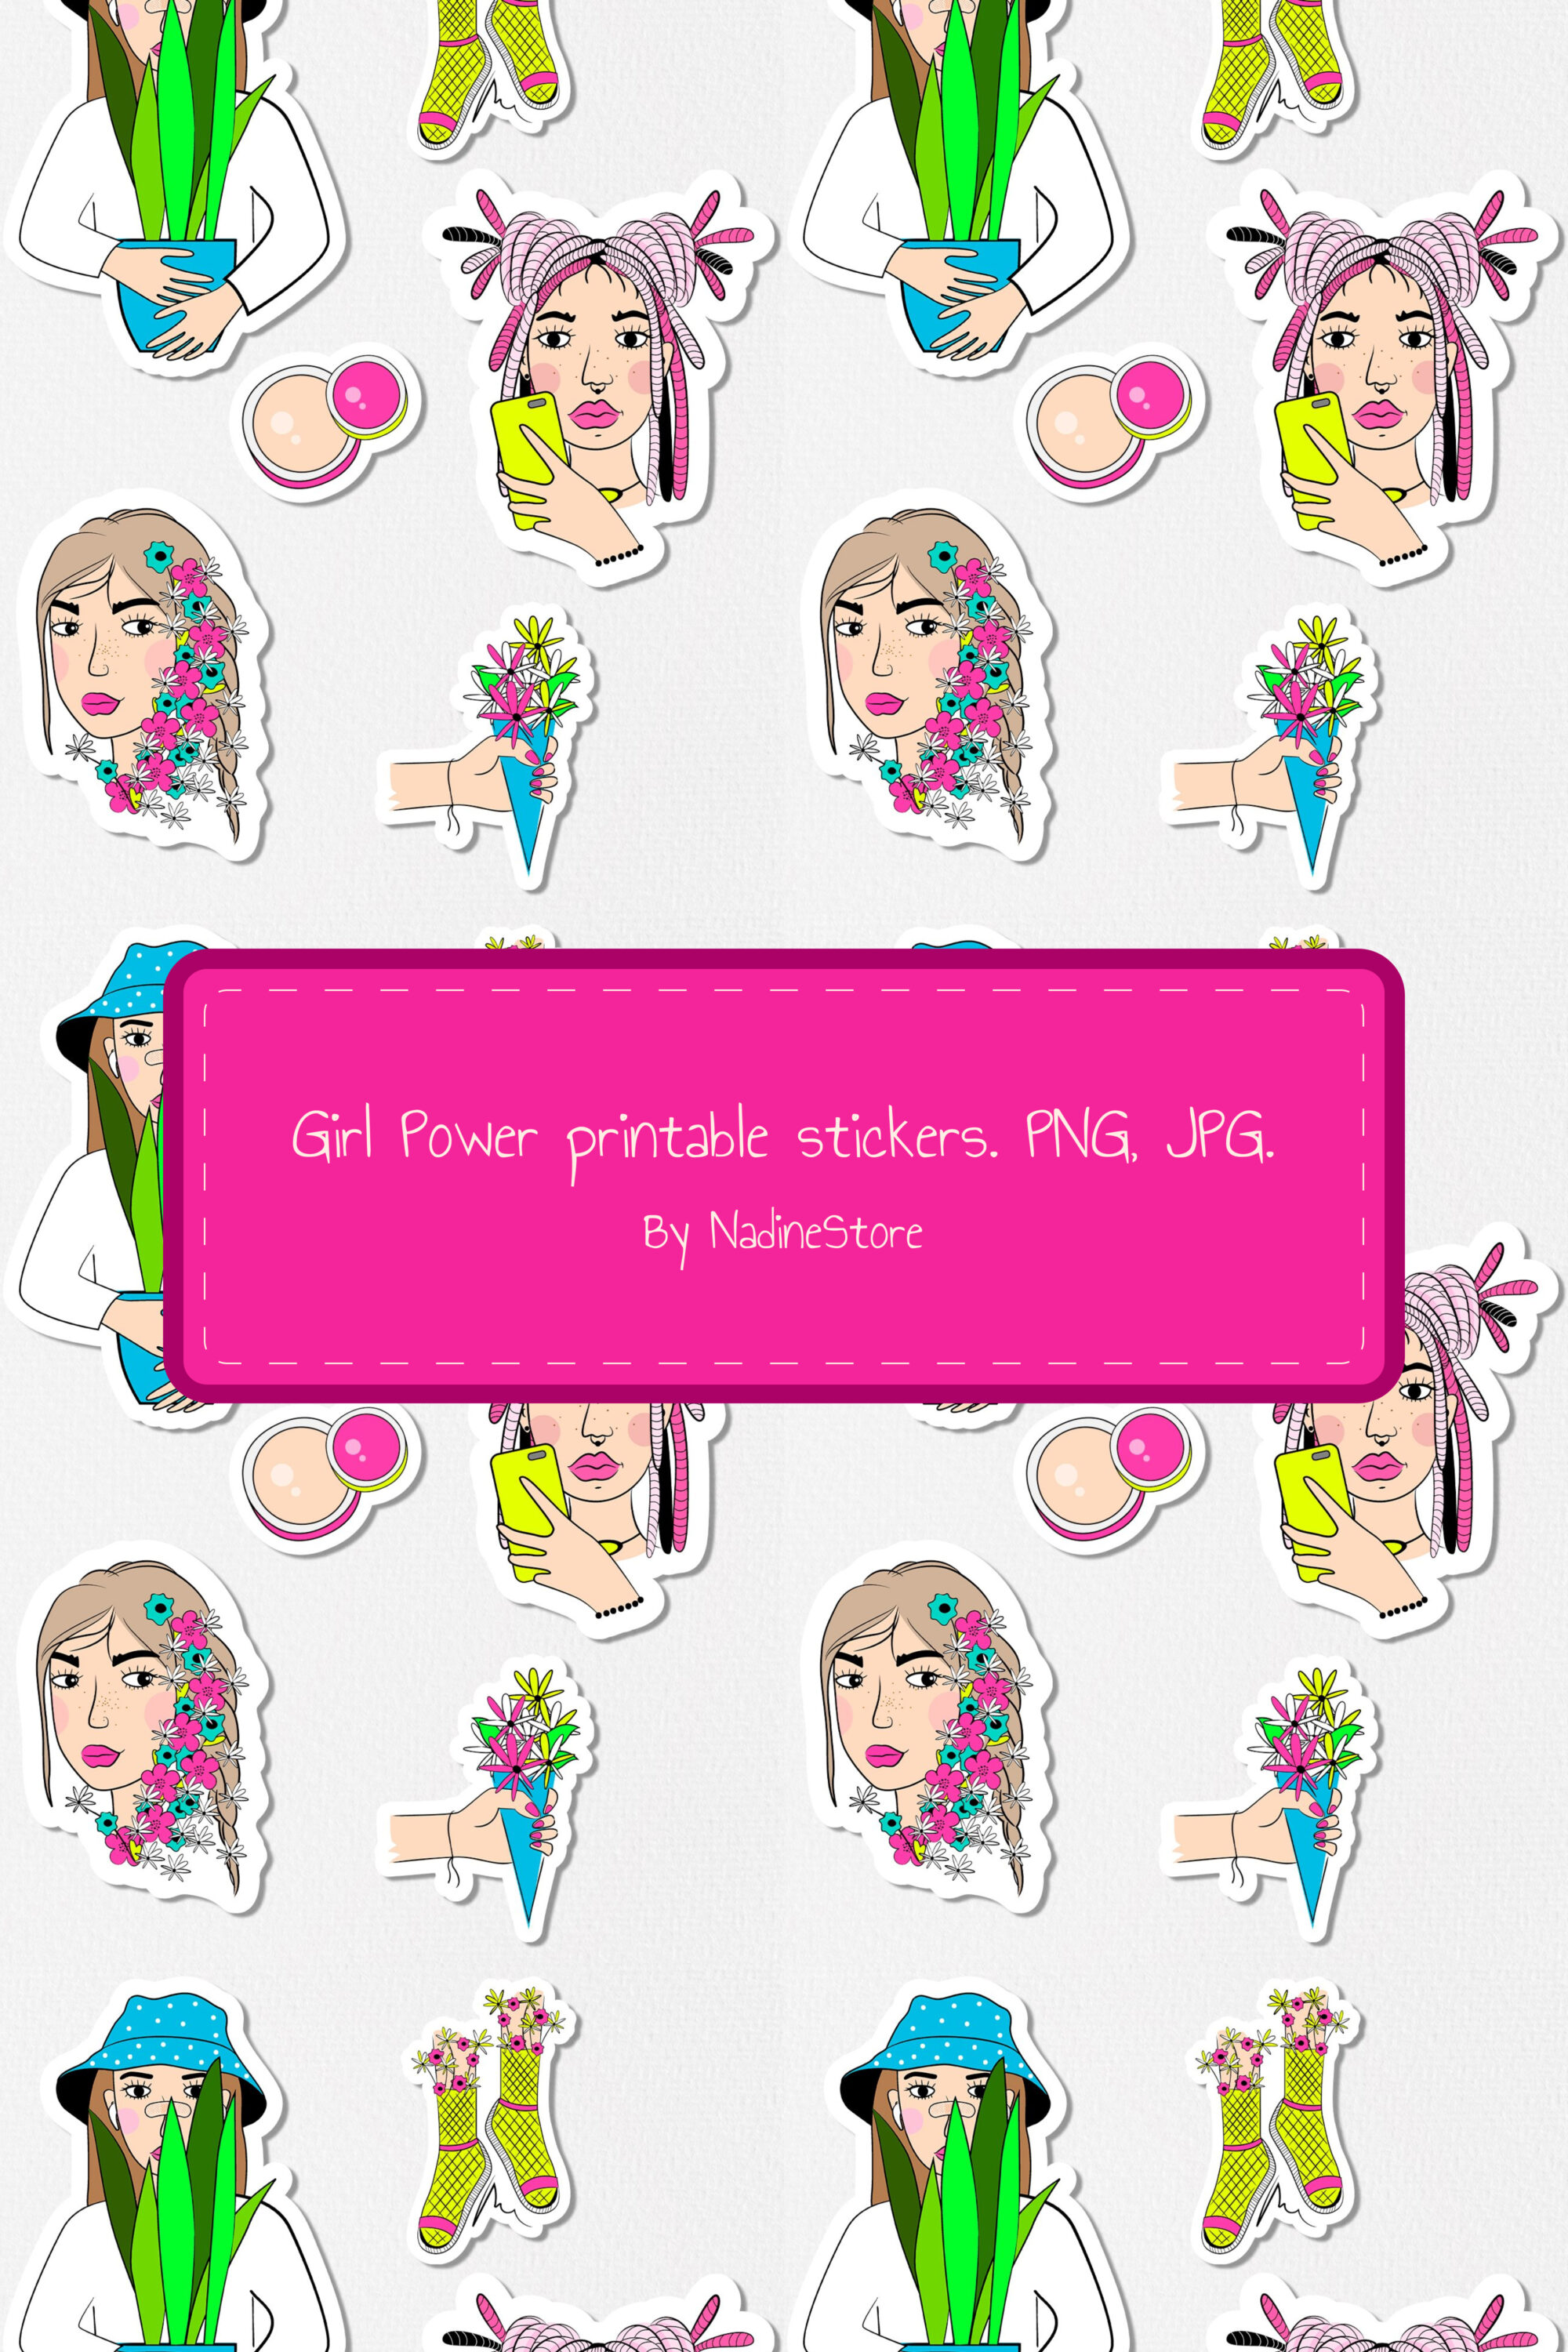 Girl power printable stickers of pinterest.